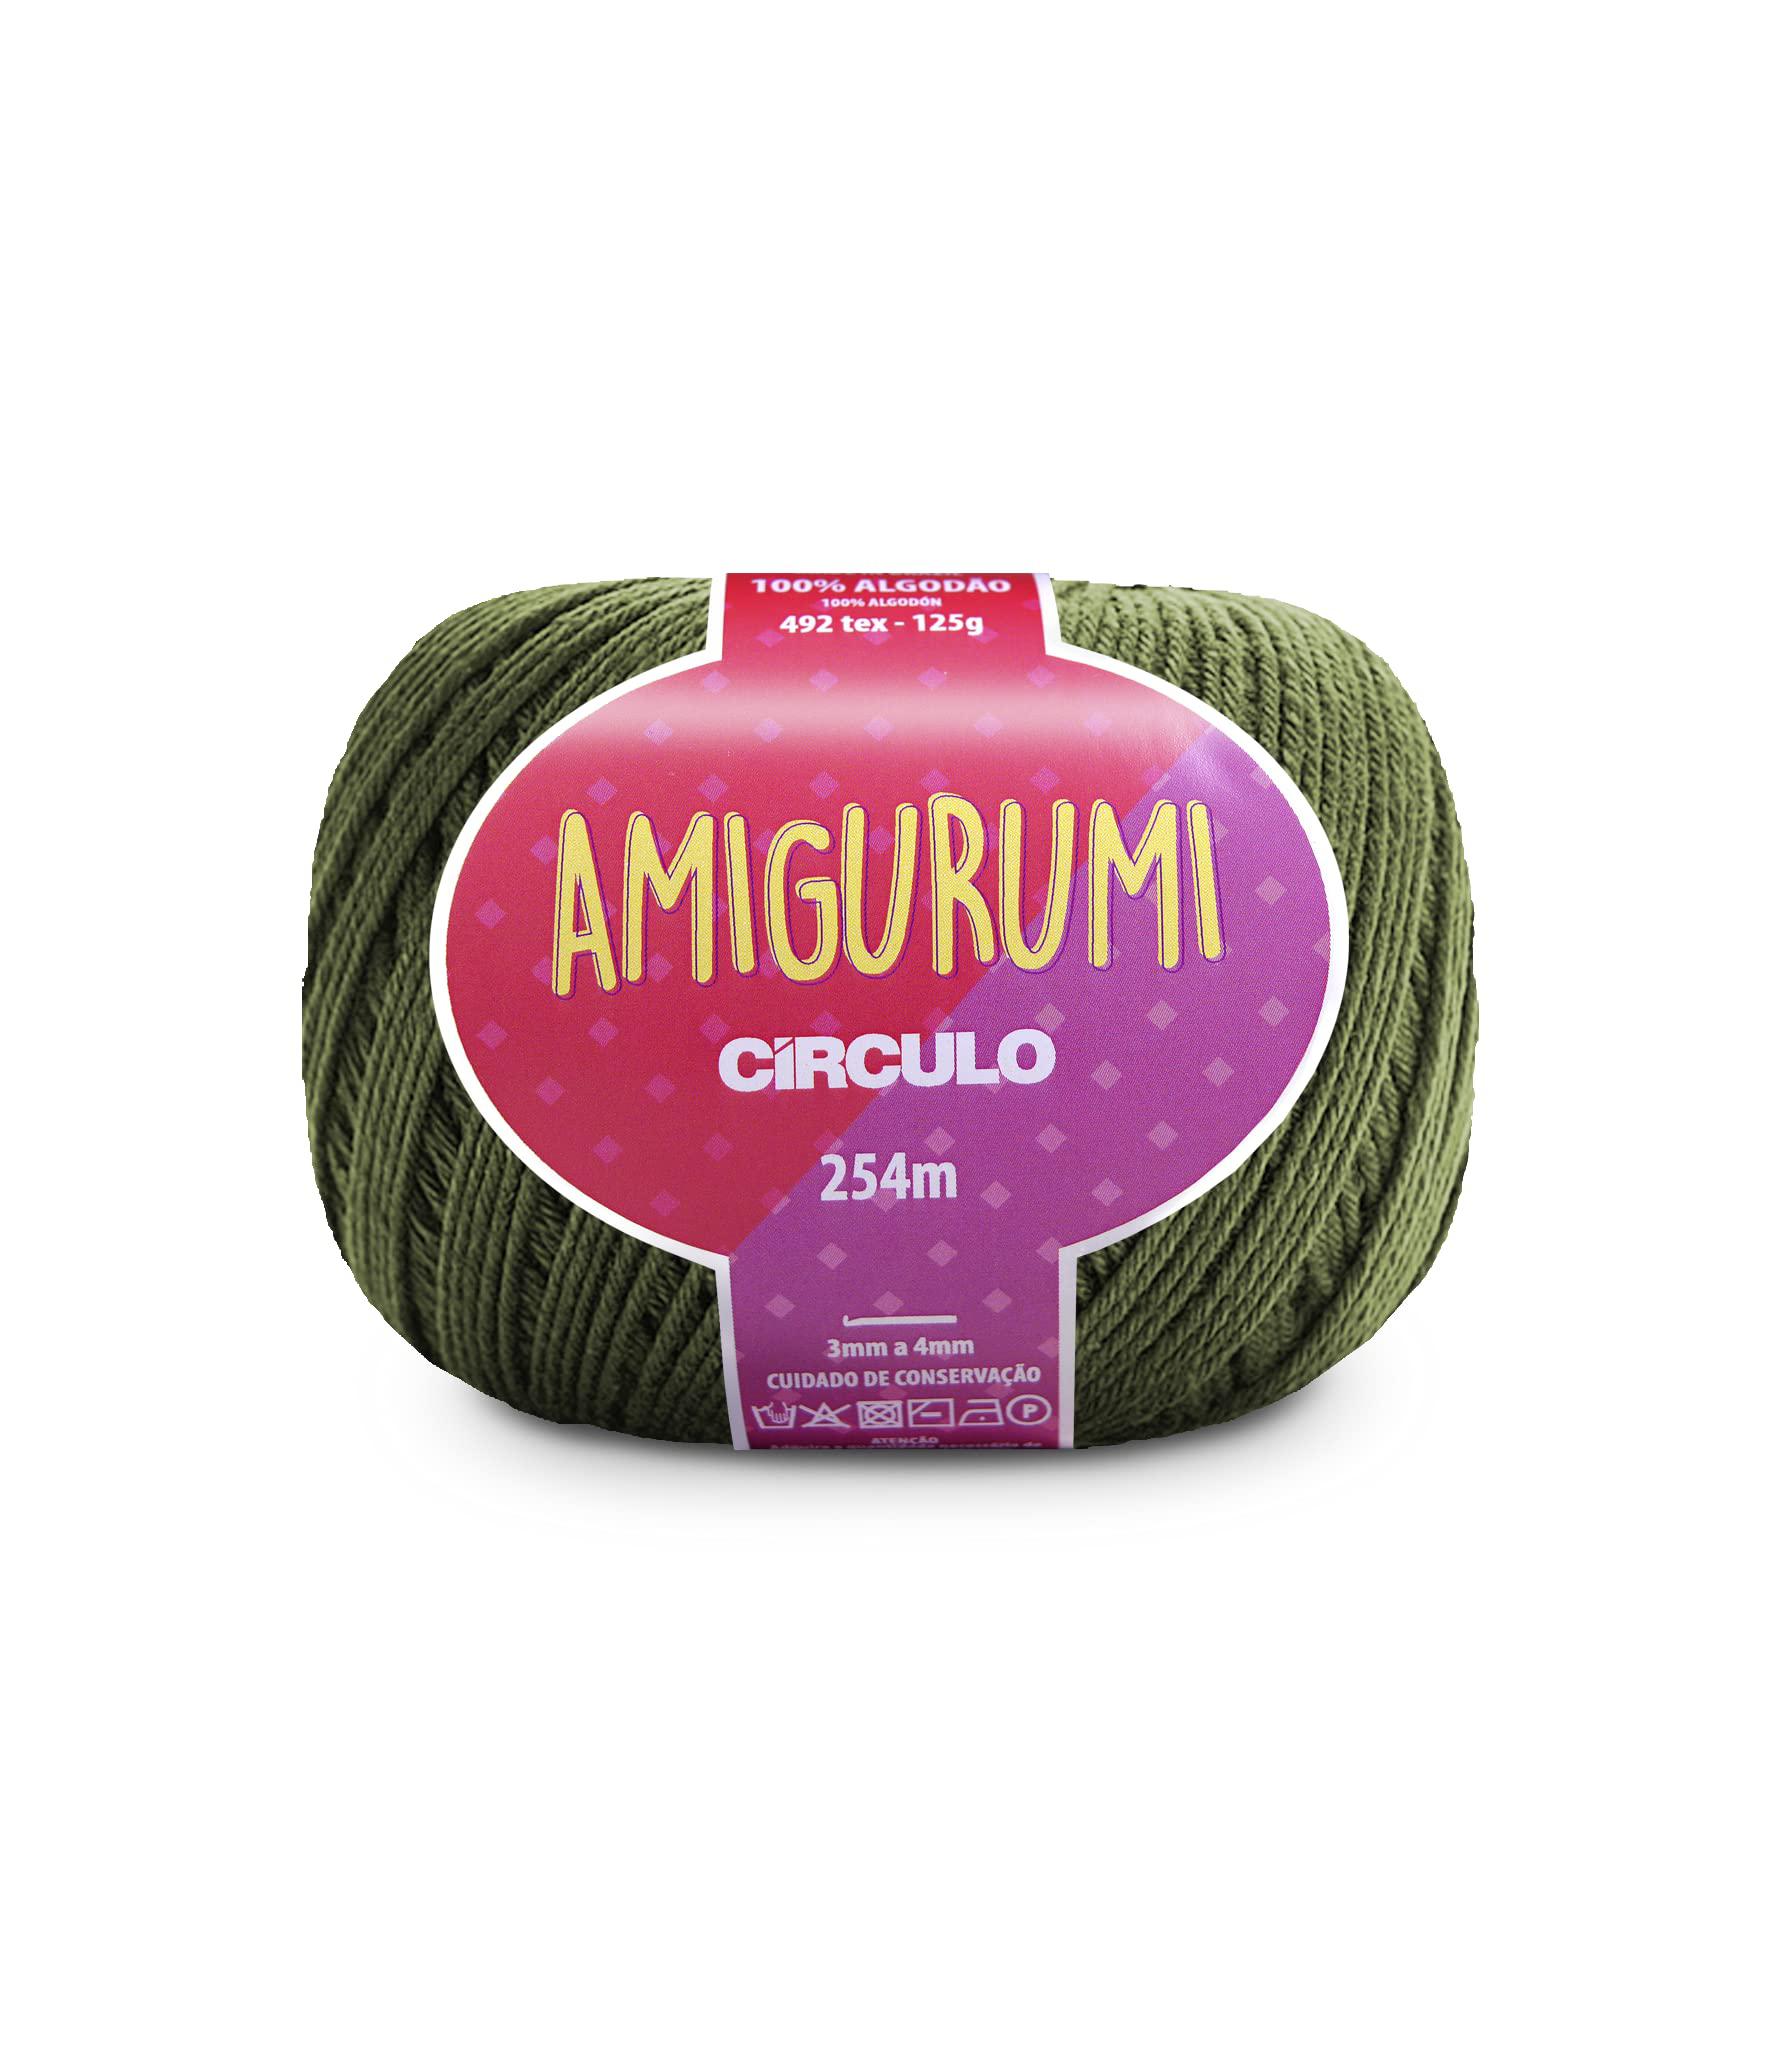 Crculo amigurumi yarn by circulo - 100% mercerized brazilian virgin cotton (pack of 1 ball) - 4.4 oz, 278 yds - sport (forest green 